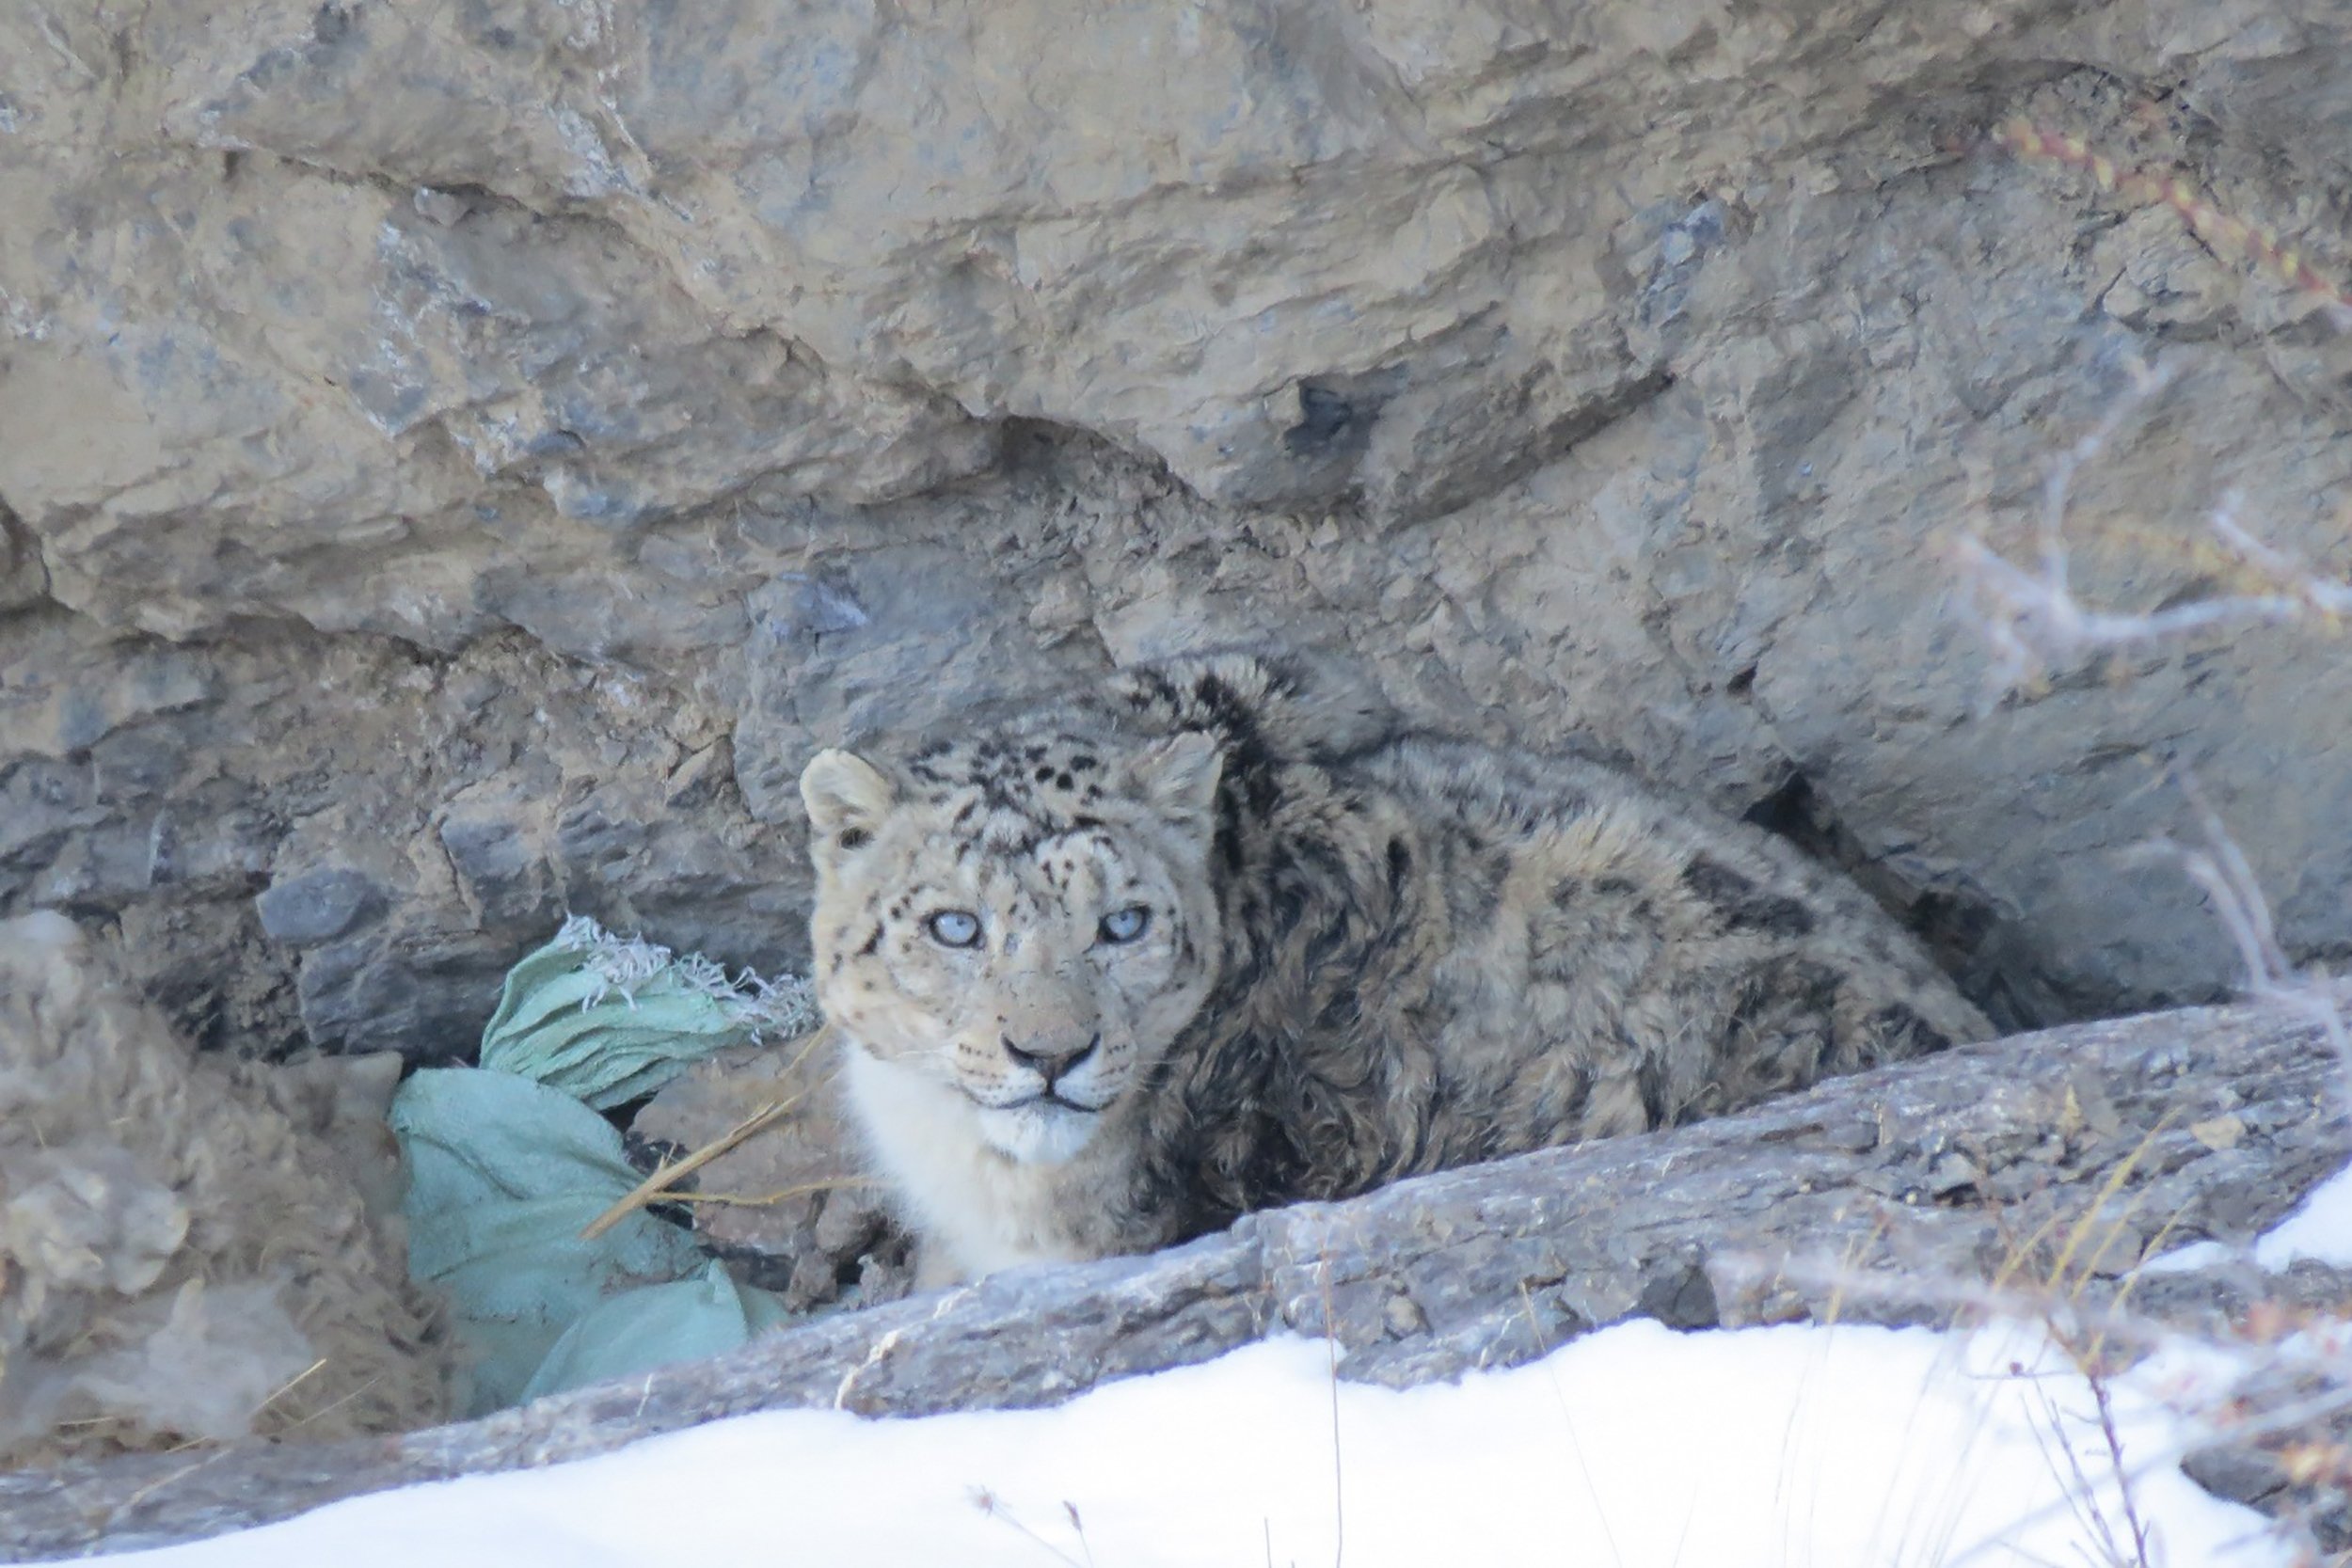 <p>A snow leopard in Uttarakhand [Image by: Sonu Negi]</p>